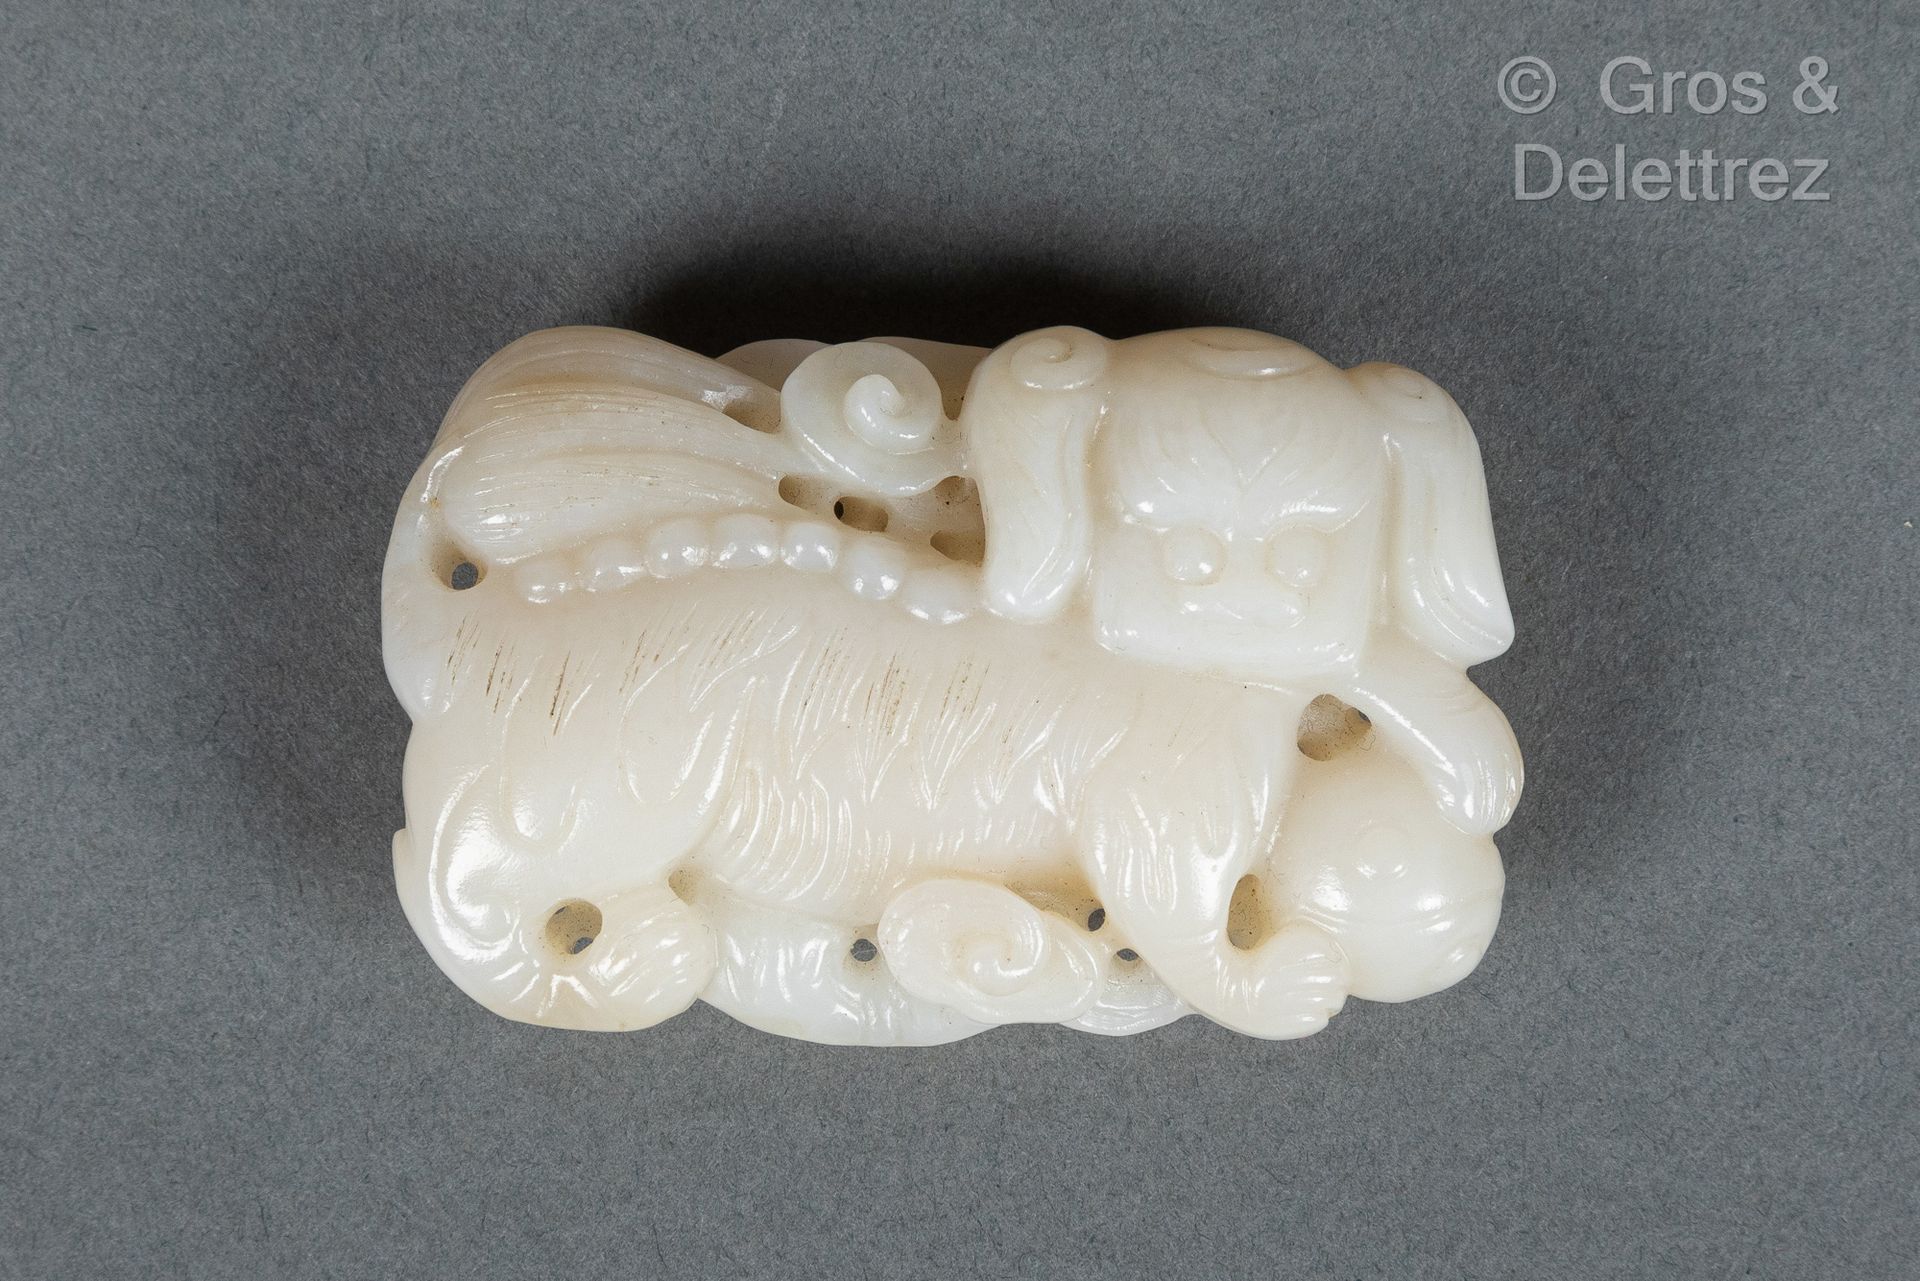 Null 中国，约1900年
白玉腰带扣，代表一只佛狗。 
长7.4厘米